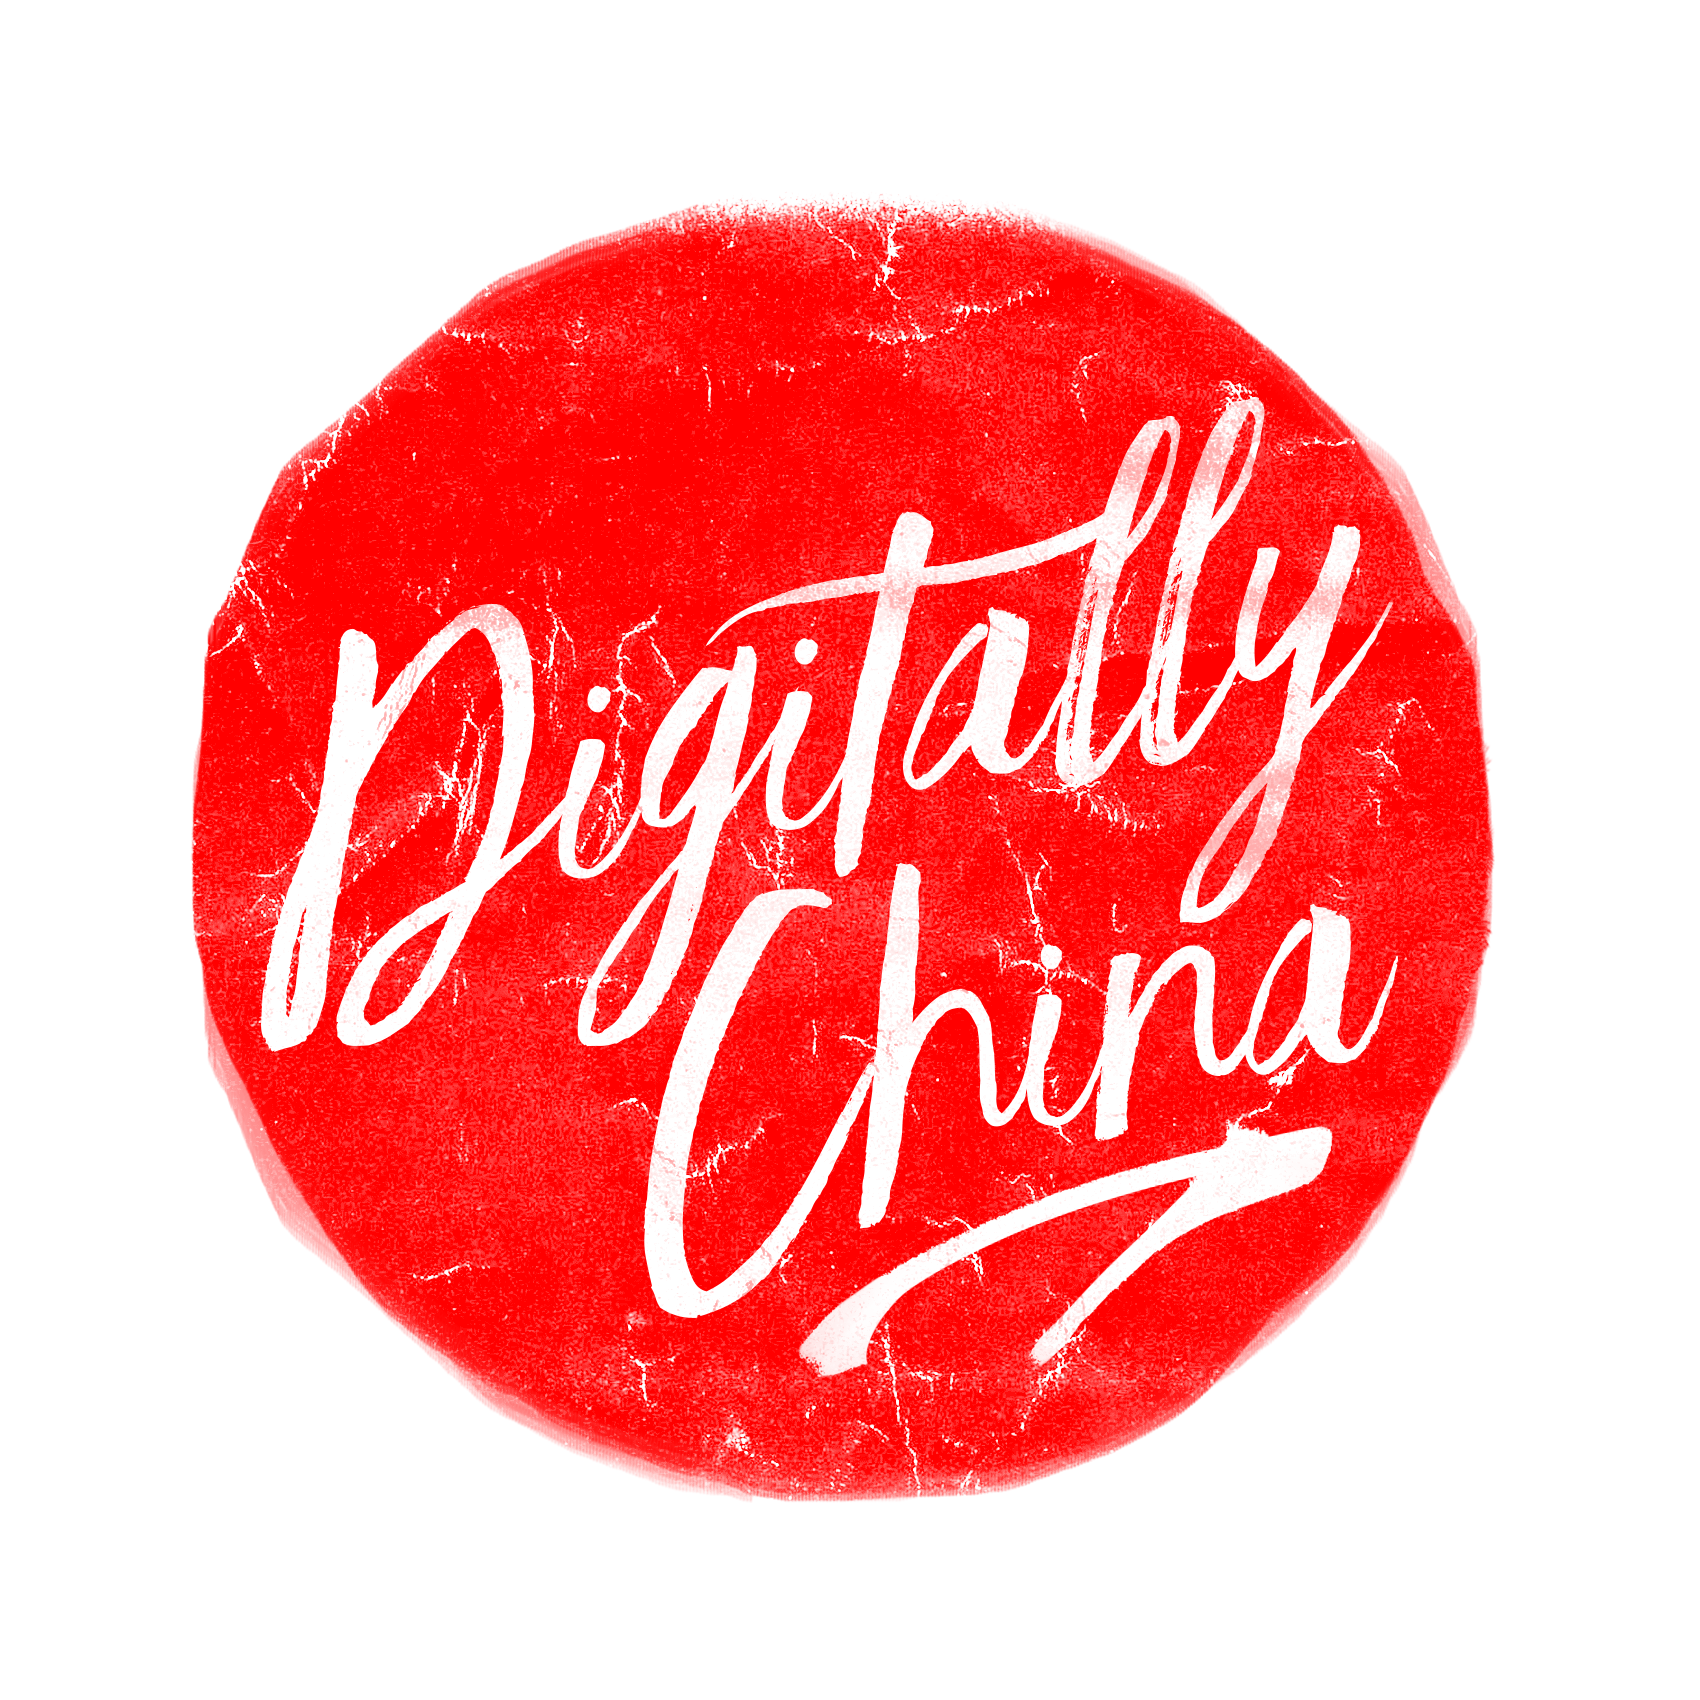 Digitally China